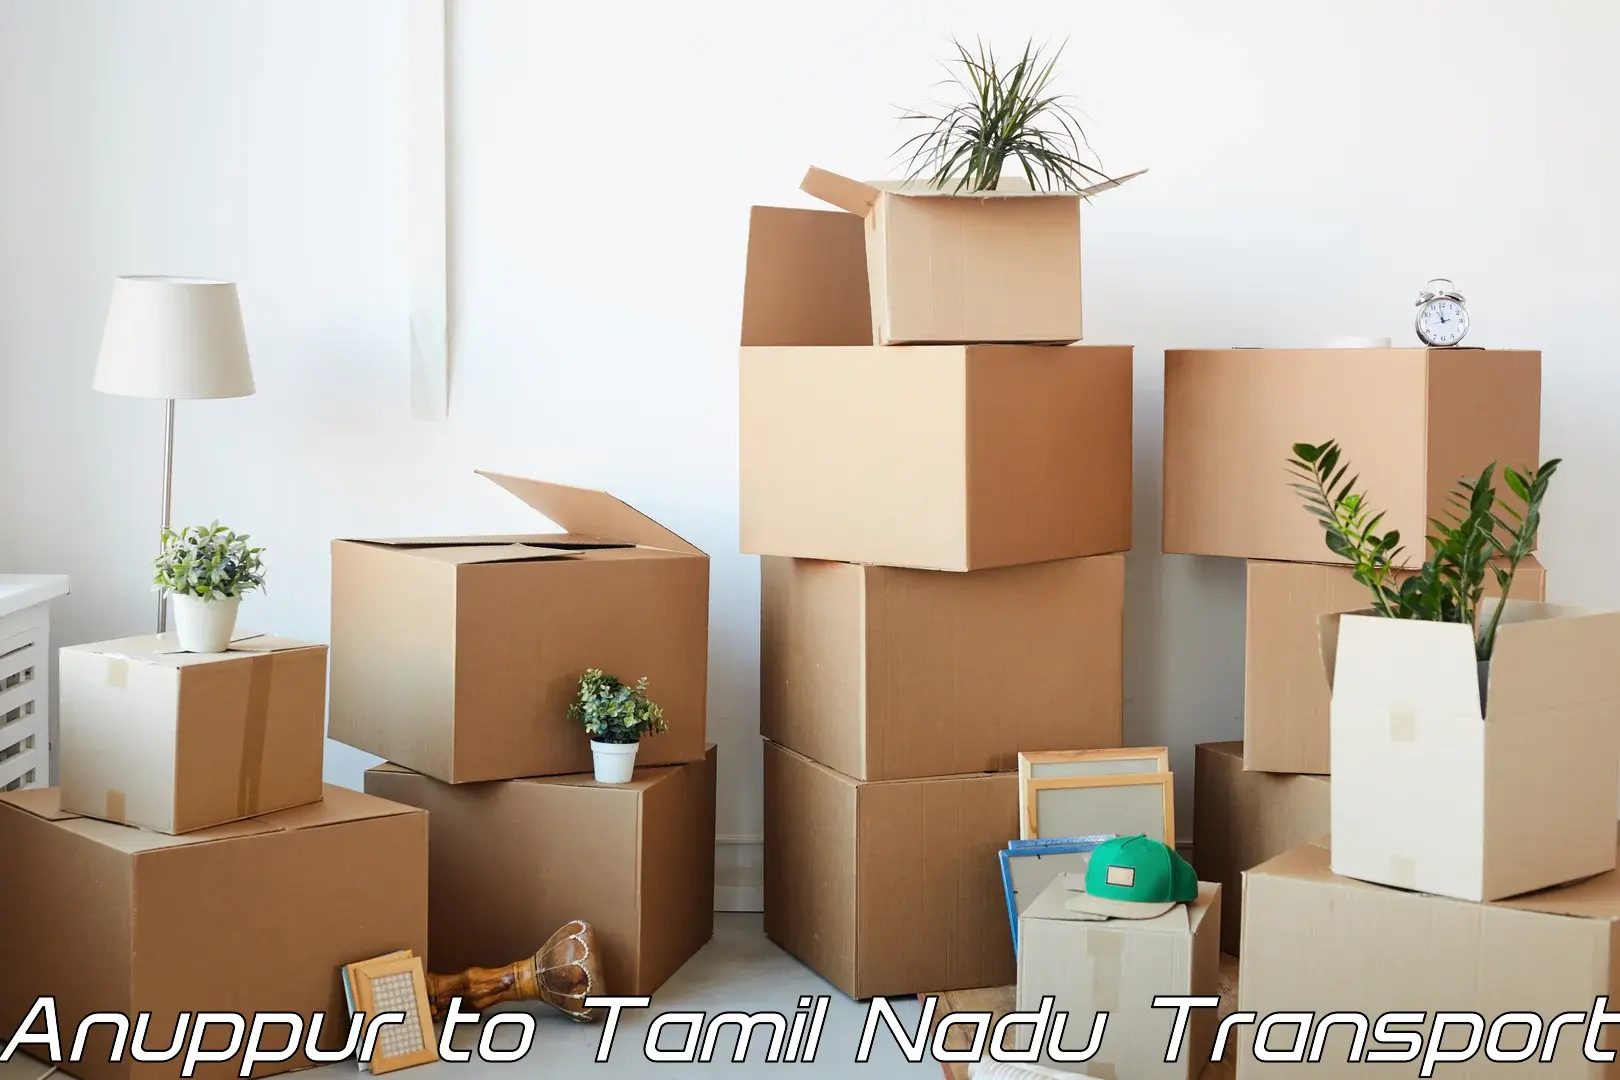 Vehicle parcel service Anuppur to Chennai